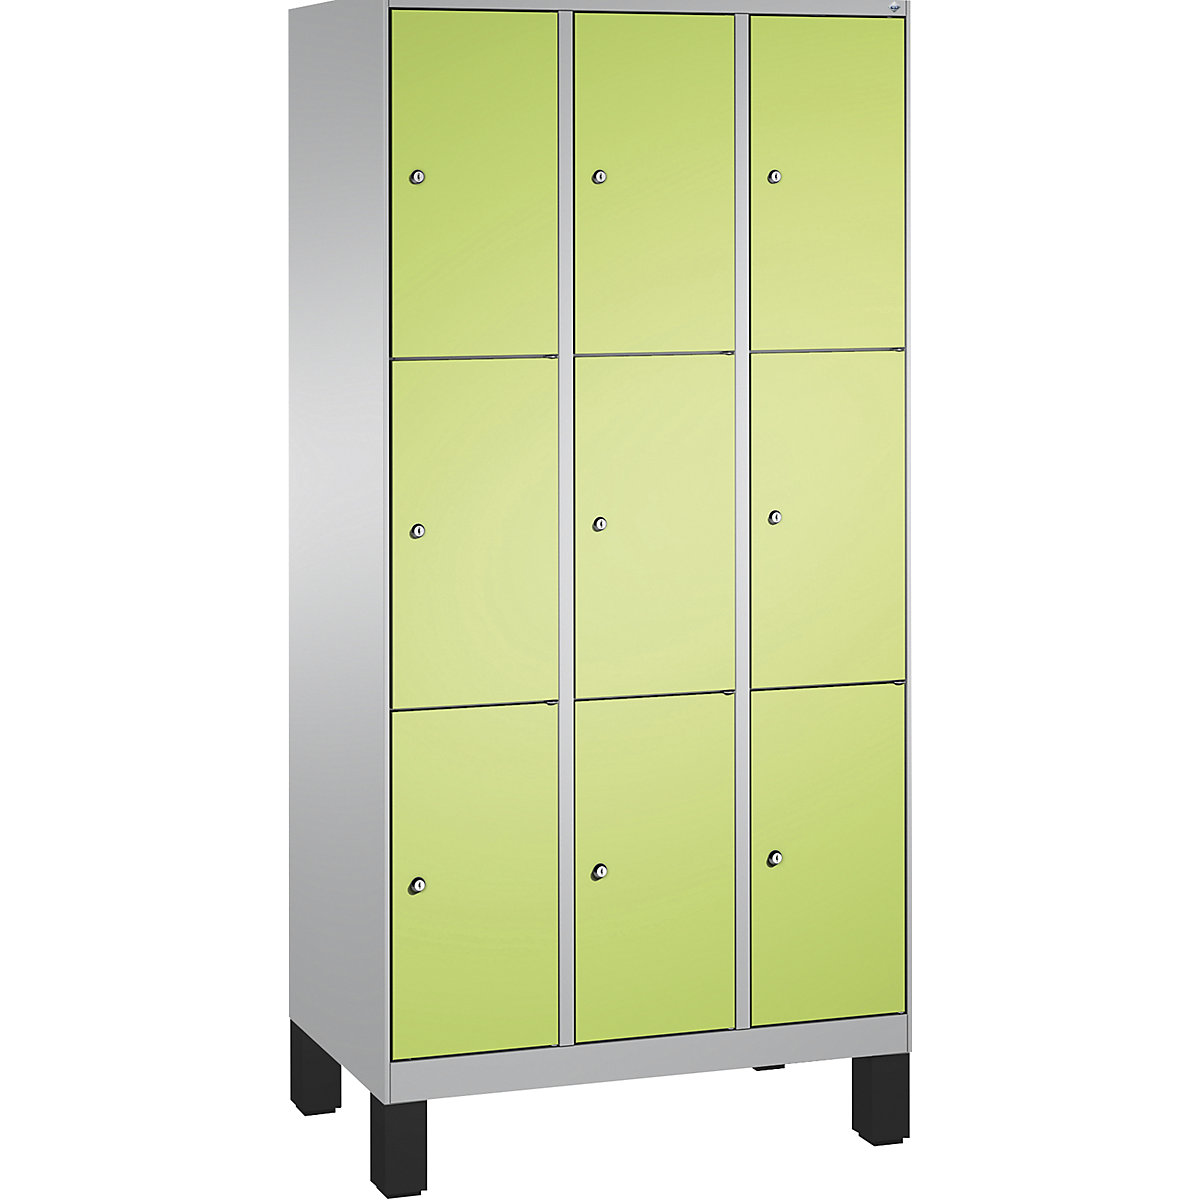 EVOLO locker unit, with feet – C+P, 3 compartments, 3 shelf compartments each, compartment width 300 mm, white aluminium / viridian green-7